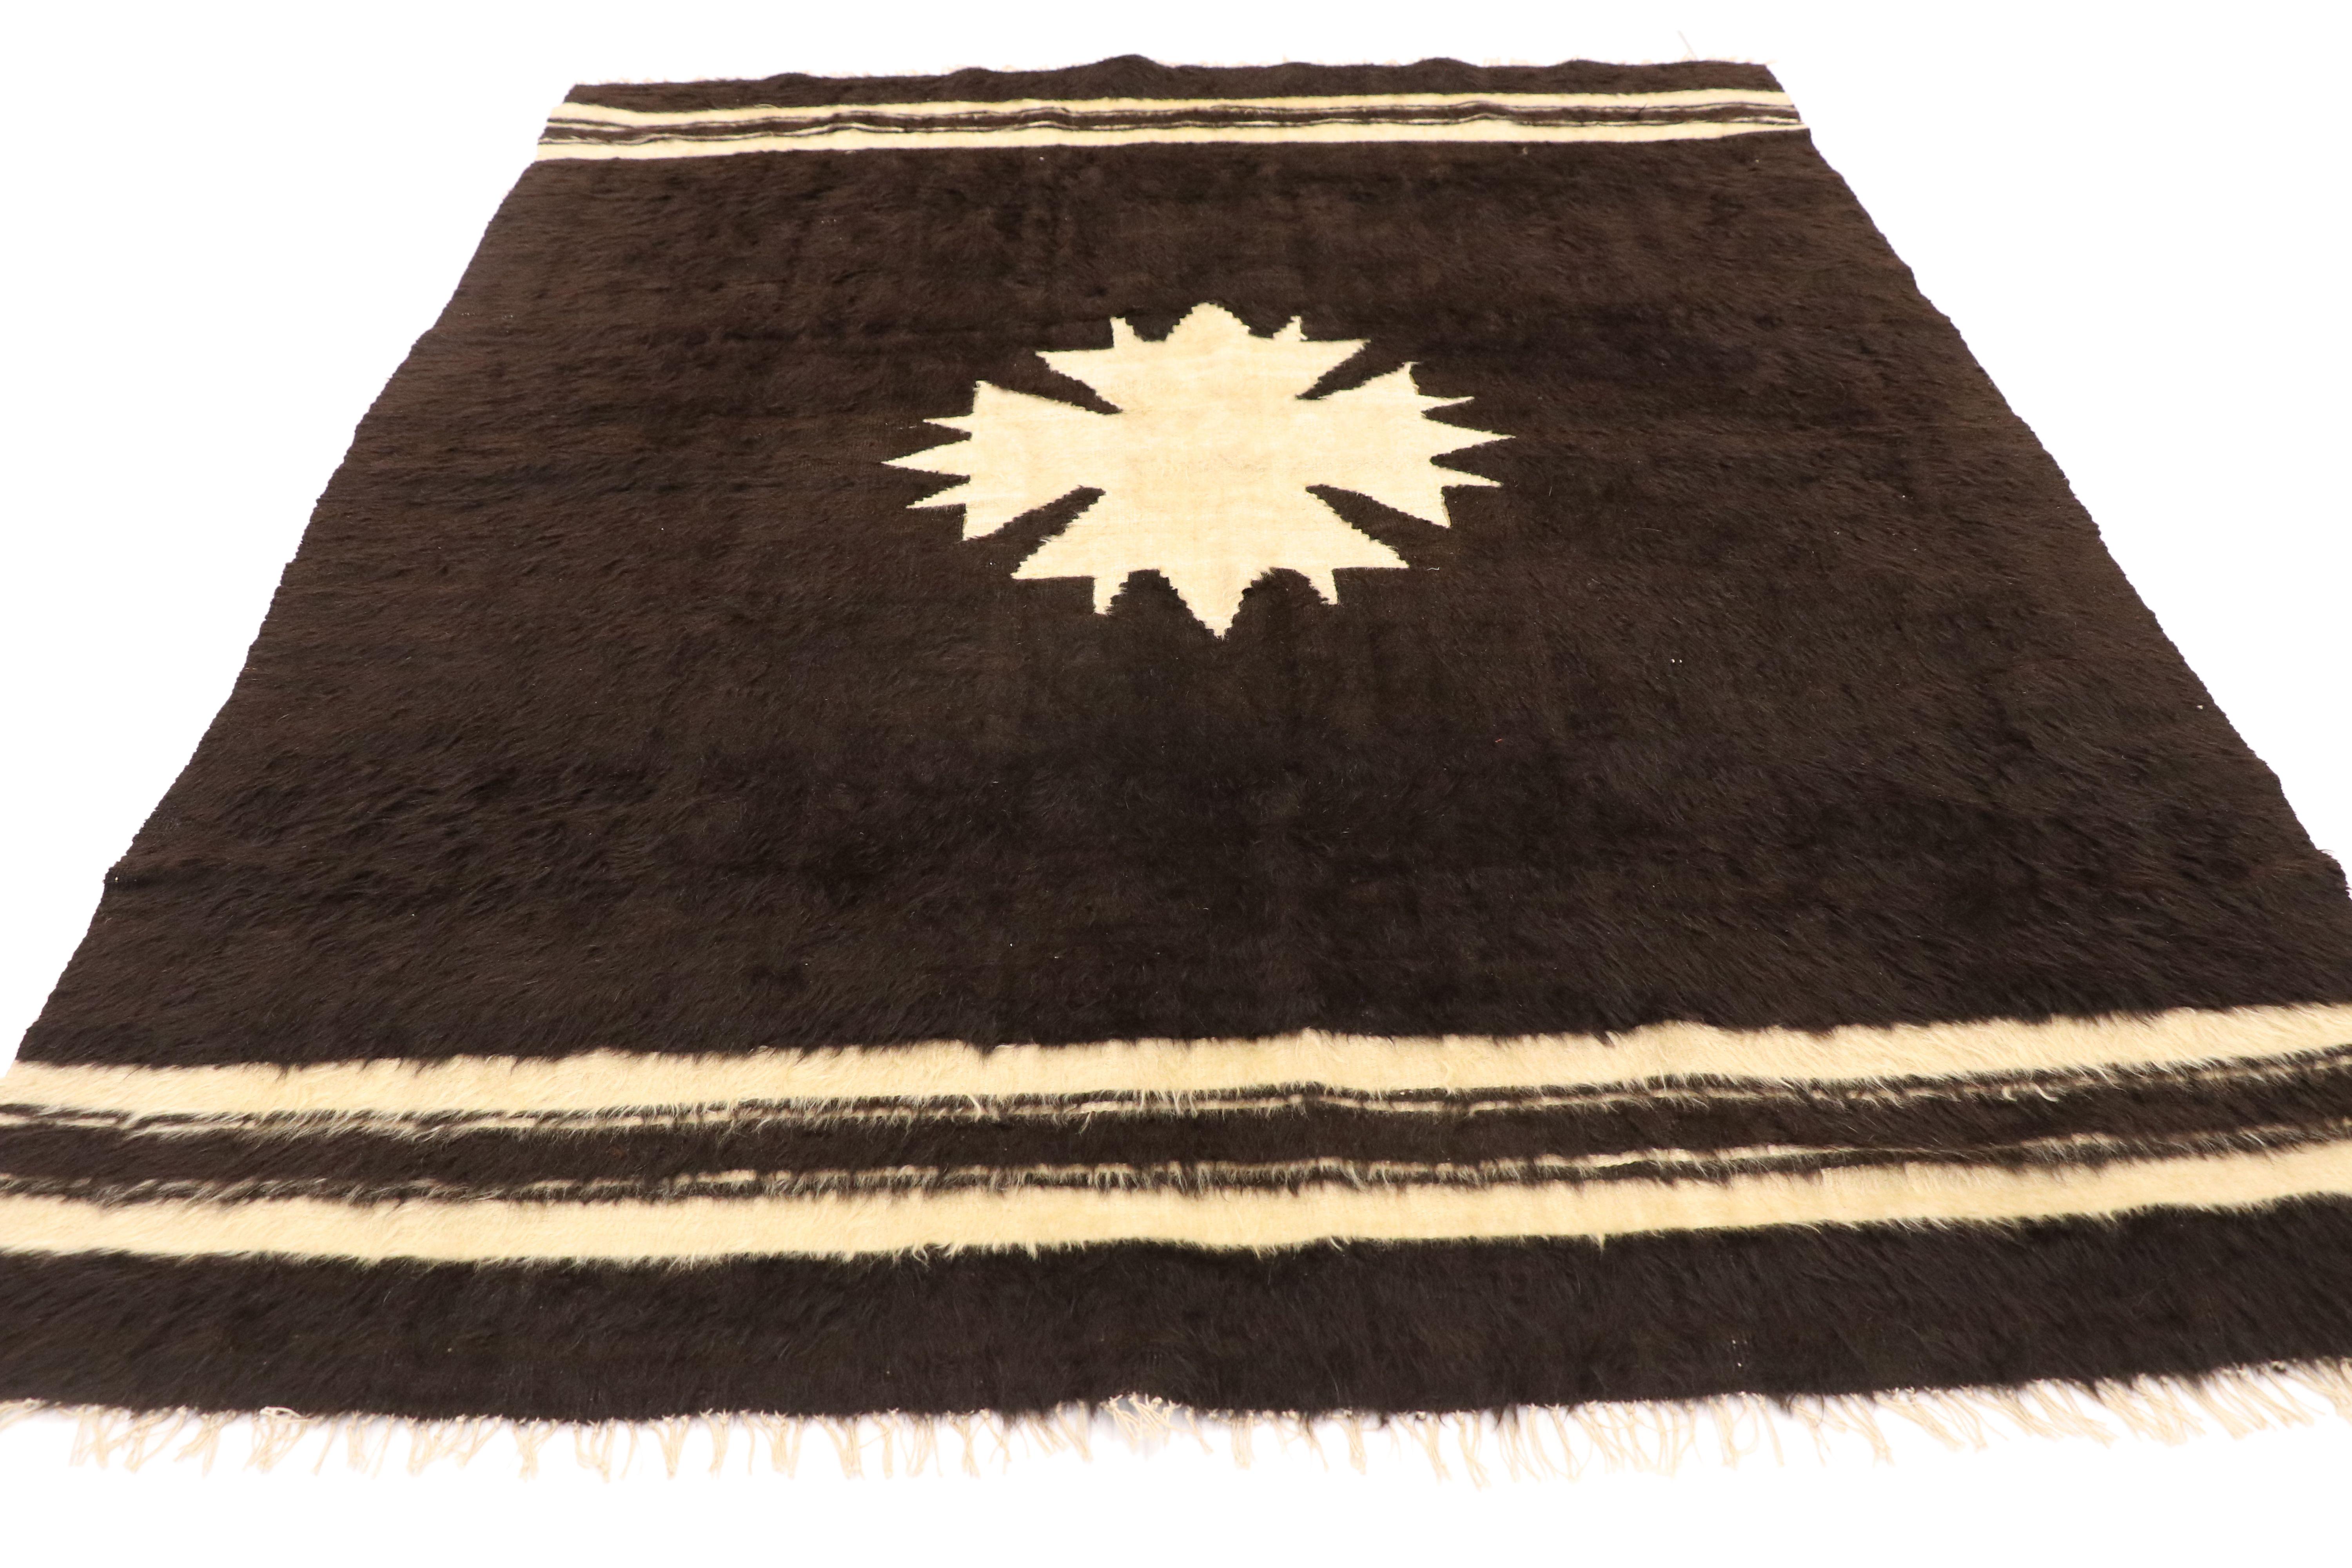 Tulu Vintage Turkish Angora Blanket Rug with Mid-Century Modern Style